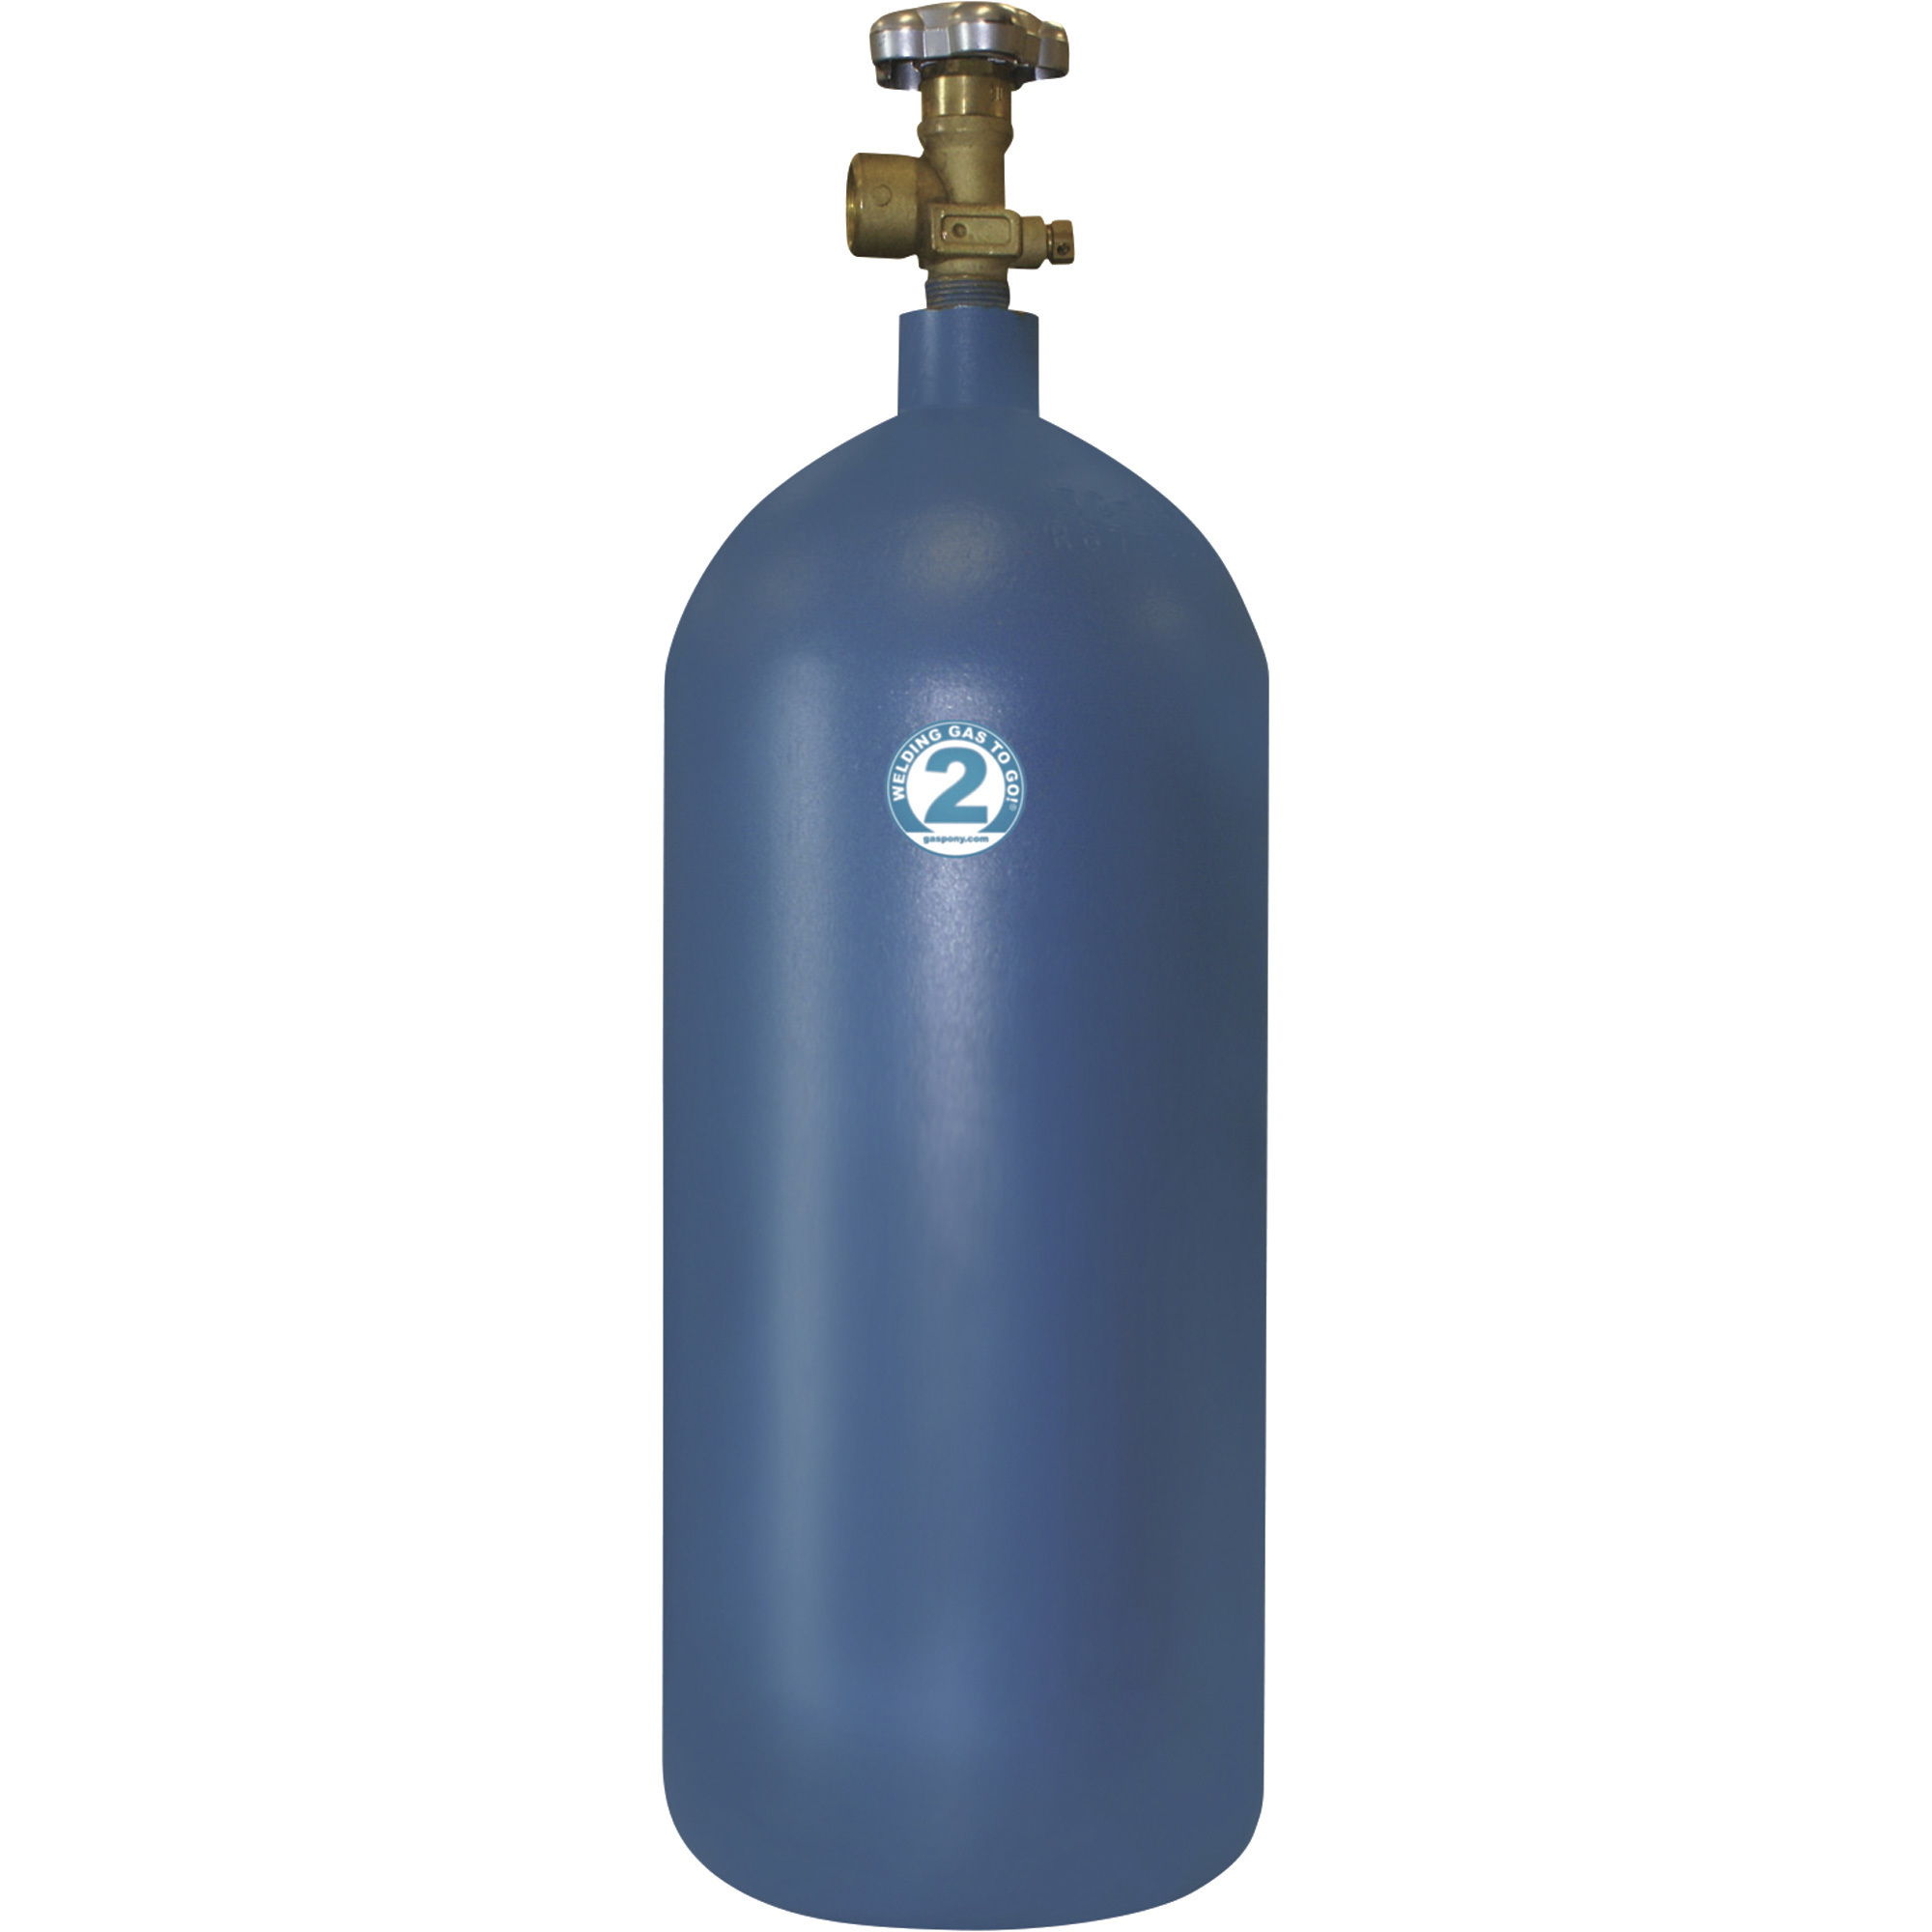 Thoroughbred Welding Gas To Go â Argon Welding Gas Cylinder, Size 2, 40 Cu. Ft., Empty, Model #TC ARG 2CC